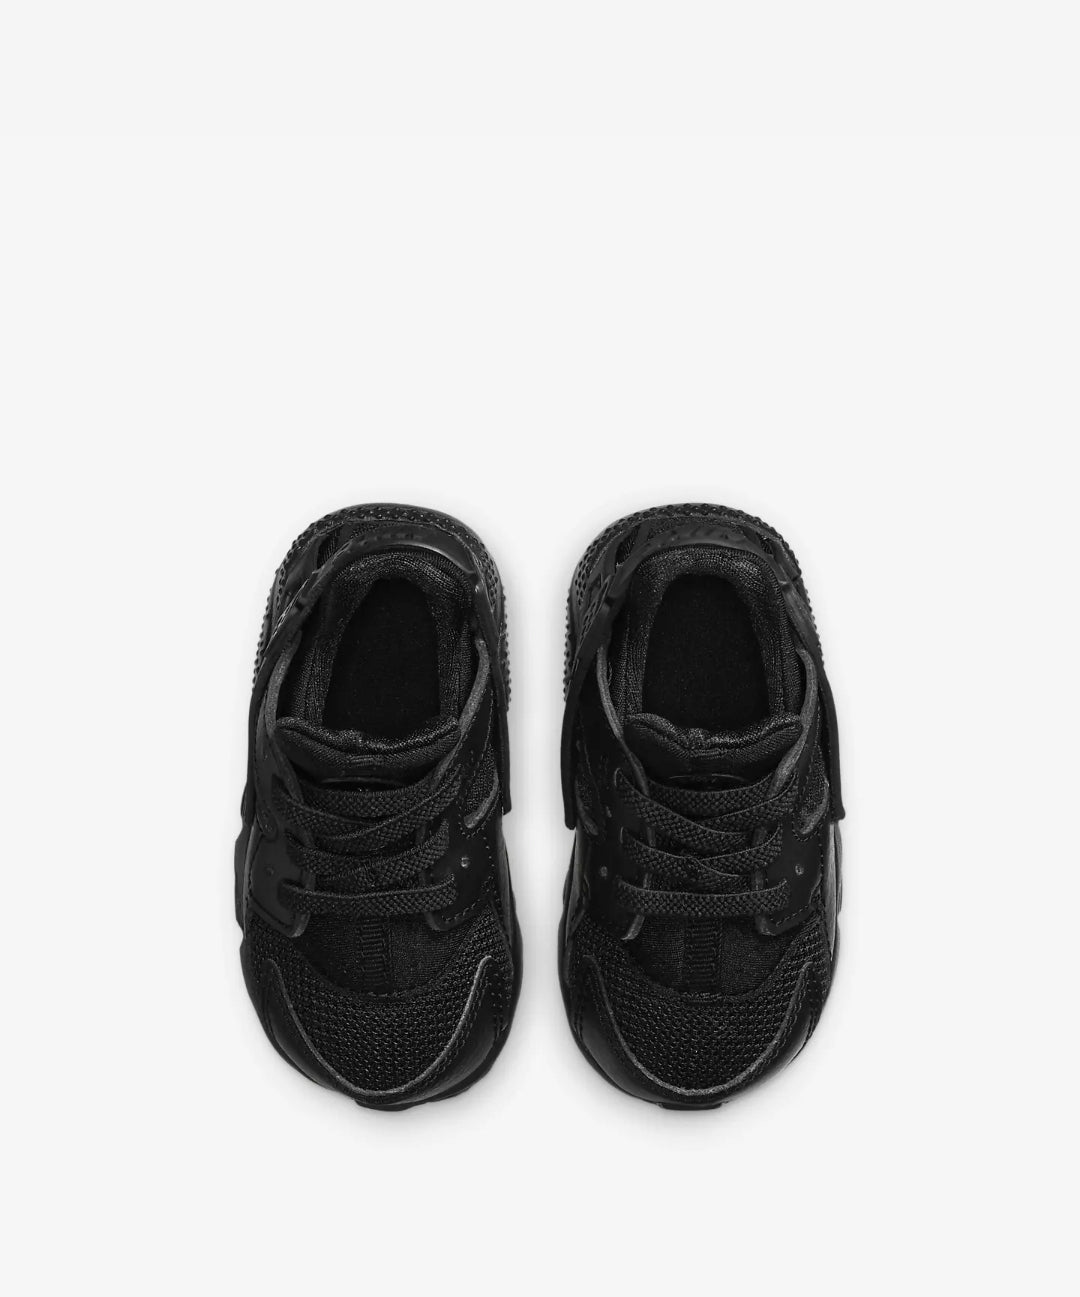 Nike Huarache Run bébé "Full black"